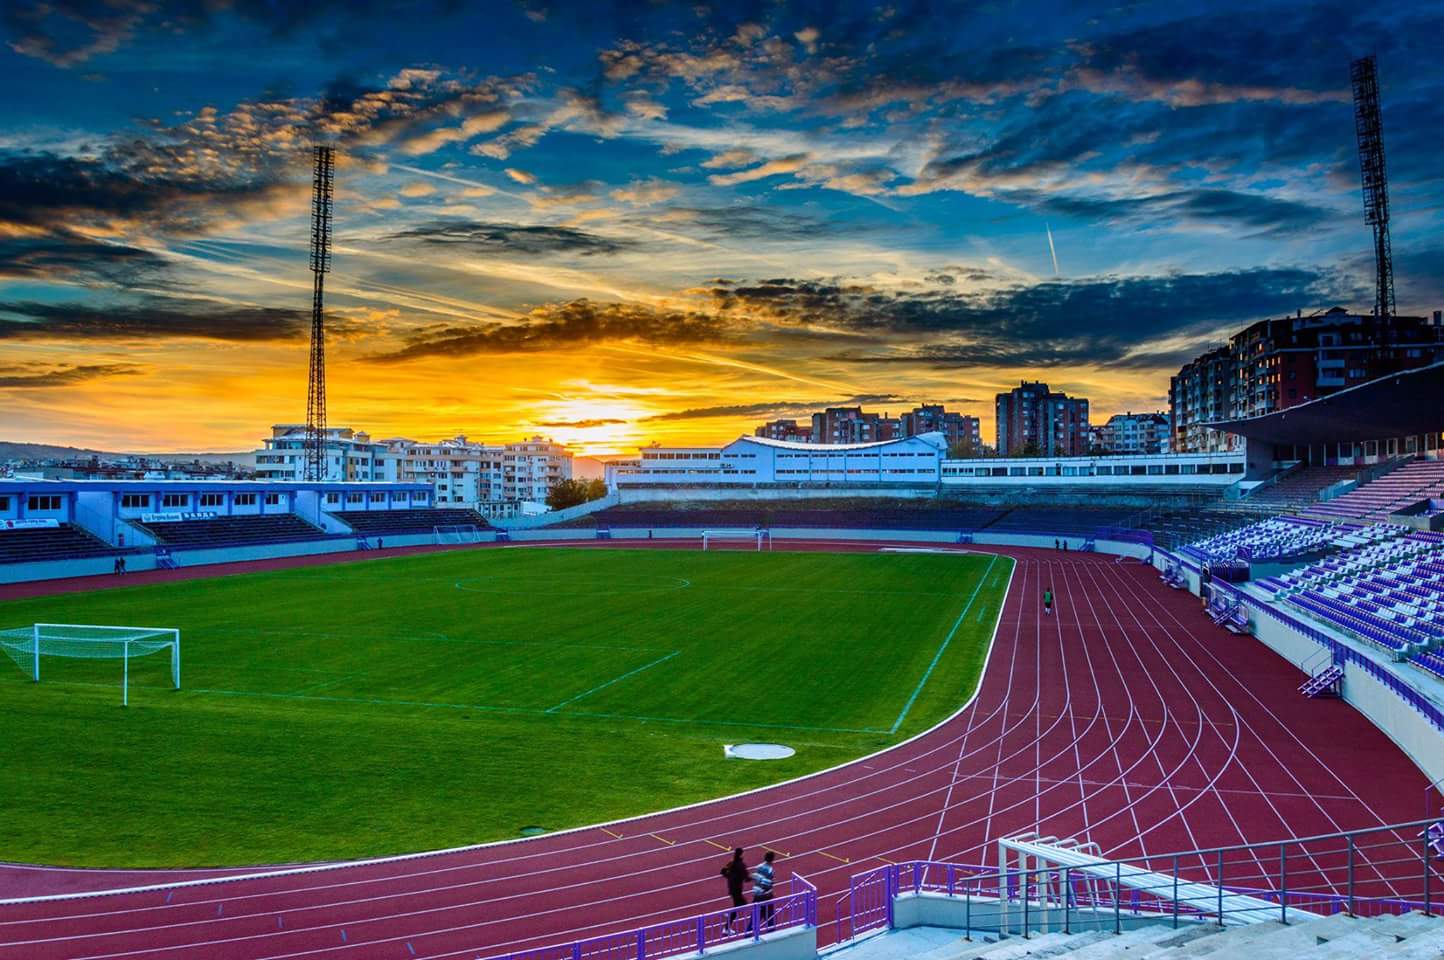 Стадион на берегу. Стадион в Приштине. Стадион Пярну раннастадион. Estoril Praia стадион. Тофик Бахрамов стадион.